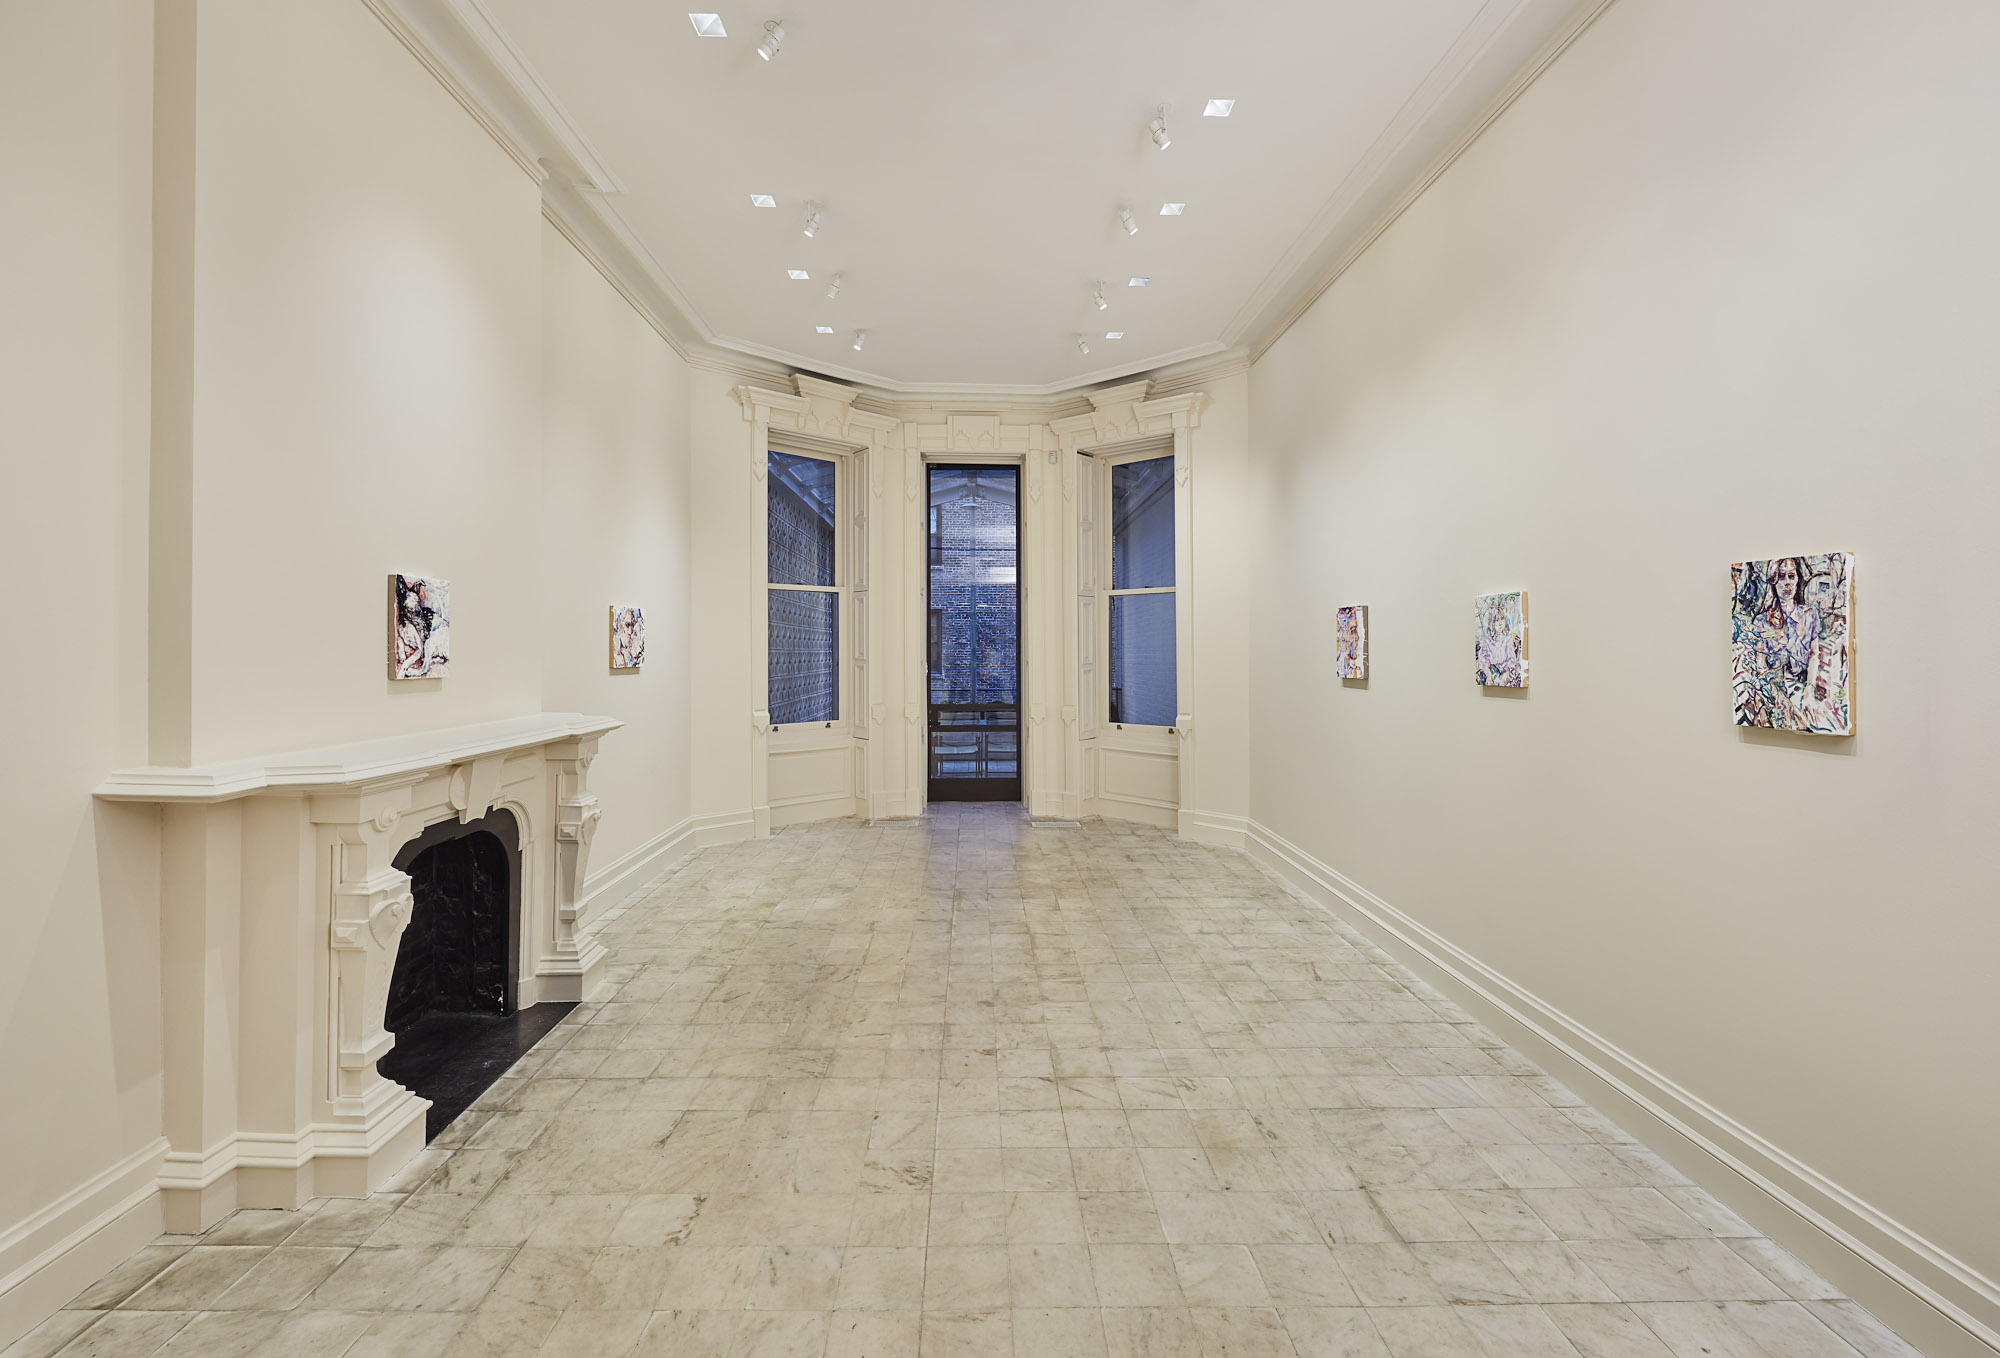 Installation view, Lara, New Work by Elizabeth Peyton, at Gladstone 64, New York, 2020